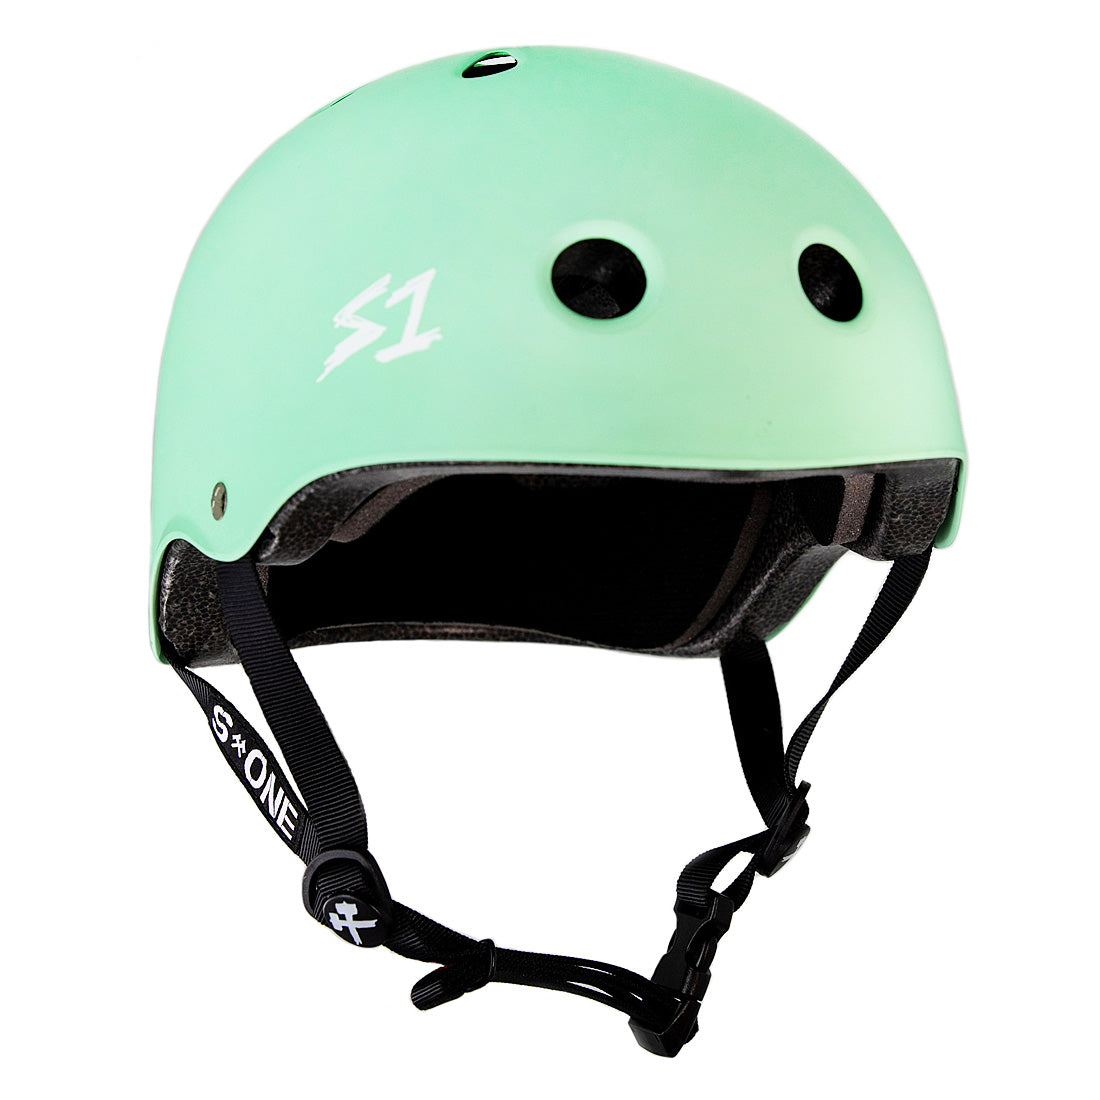 S-One Lifer Helmet - Mint Green Matte Helmets